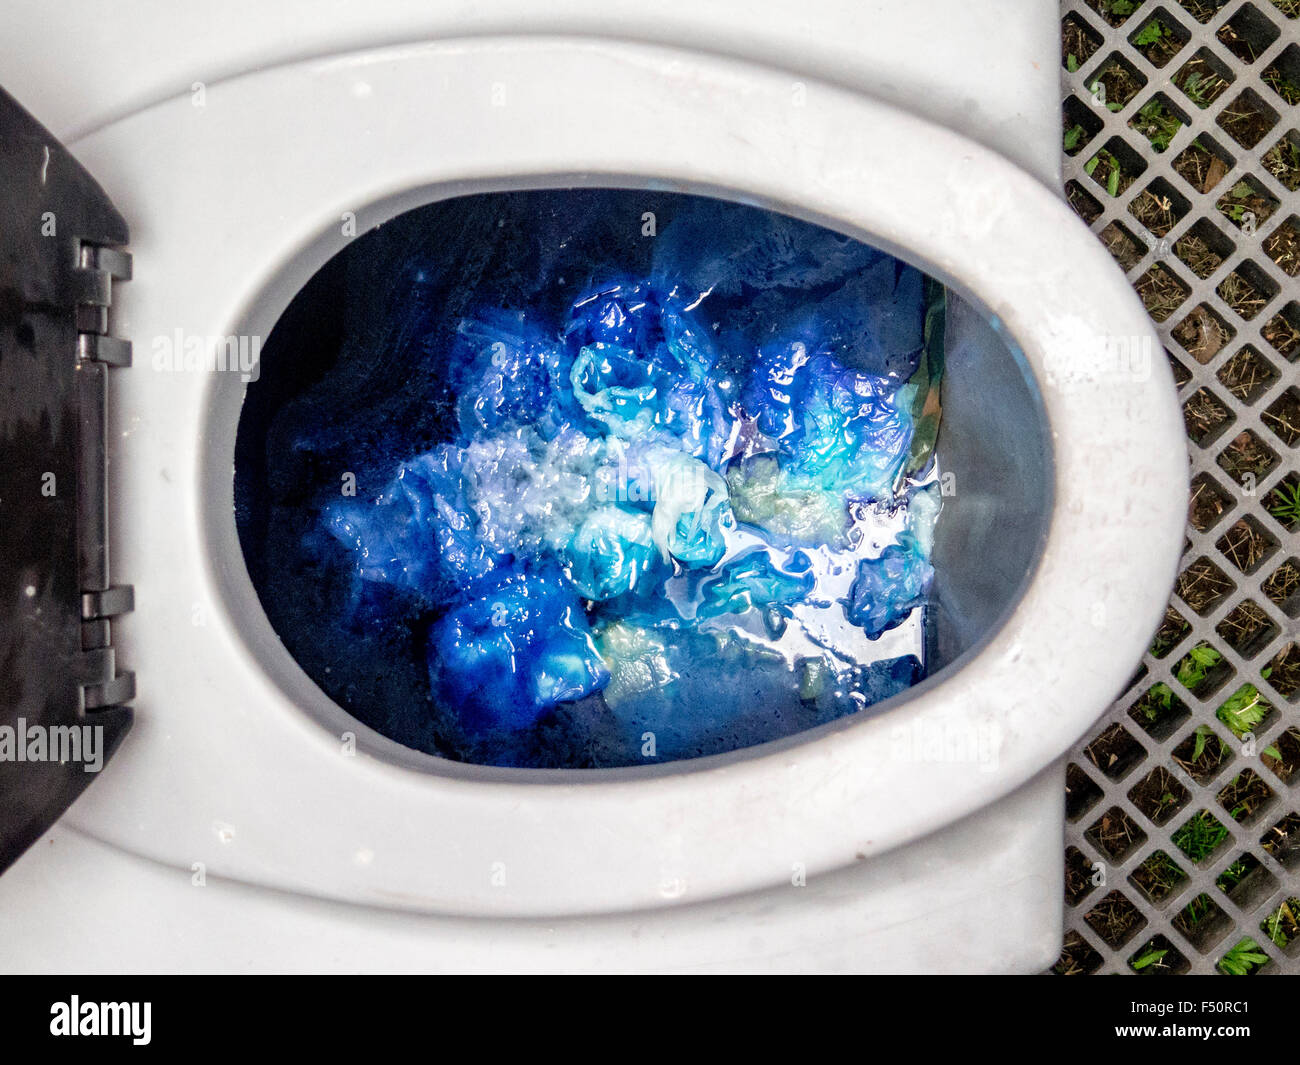 Human waste in portable toilet Stock Photo